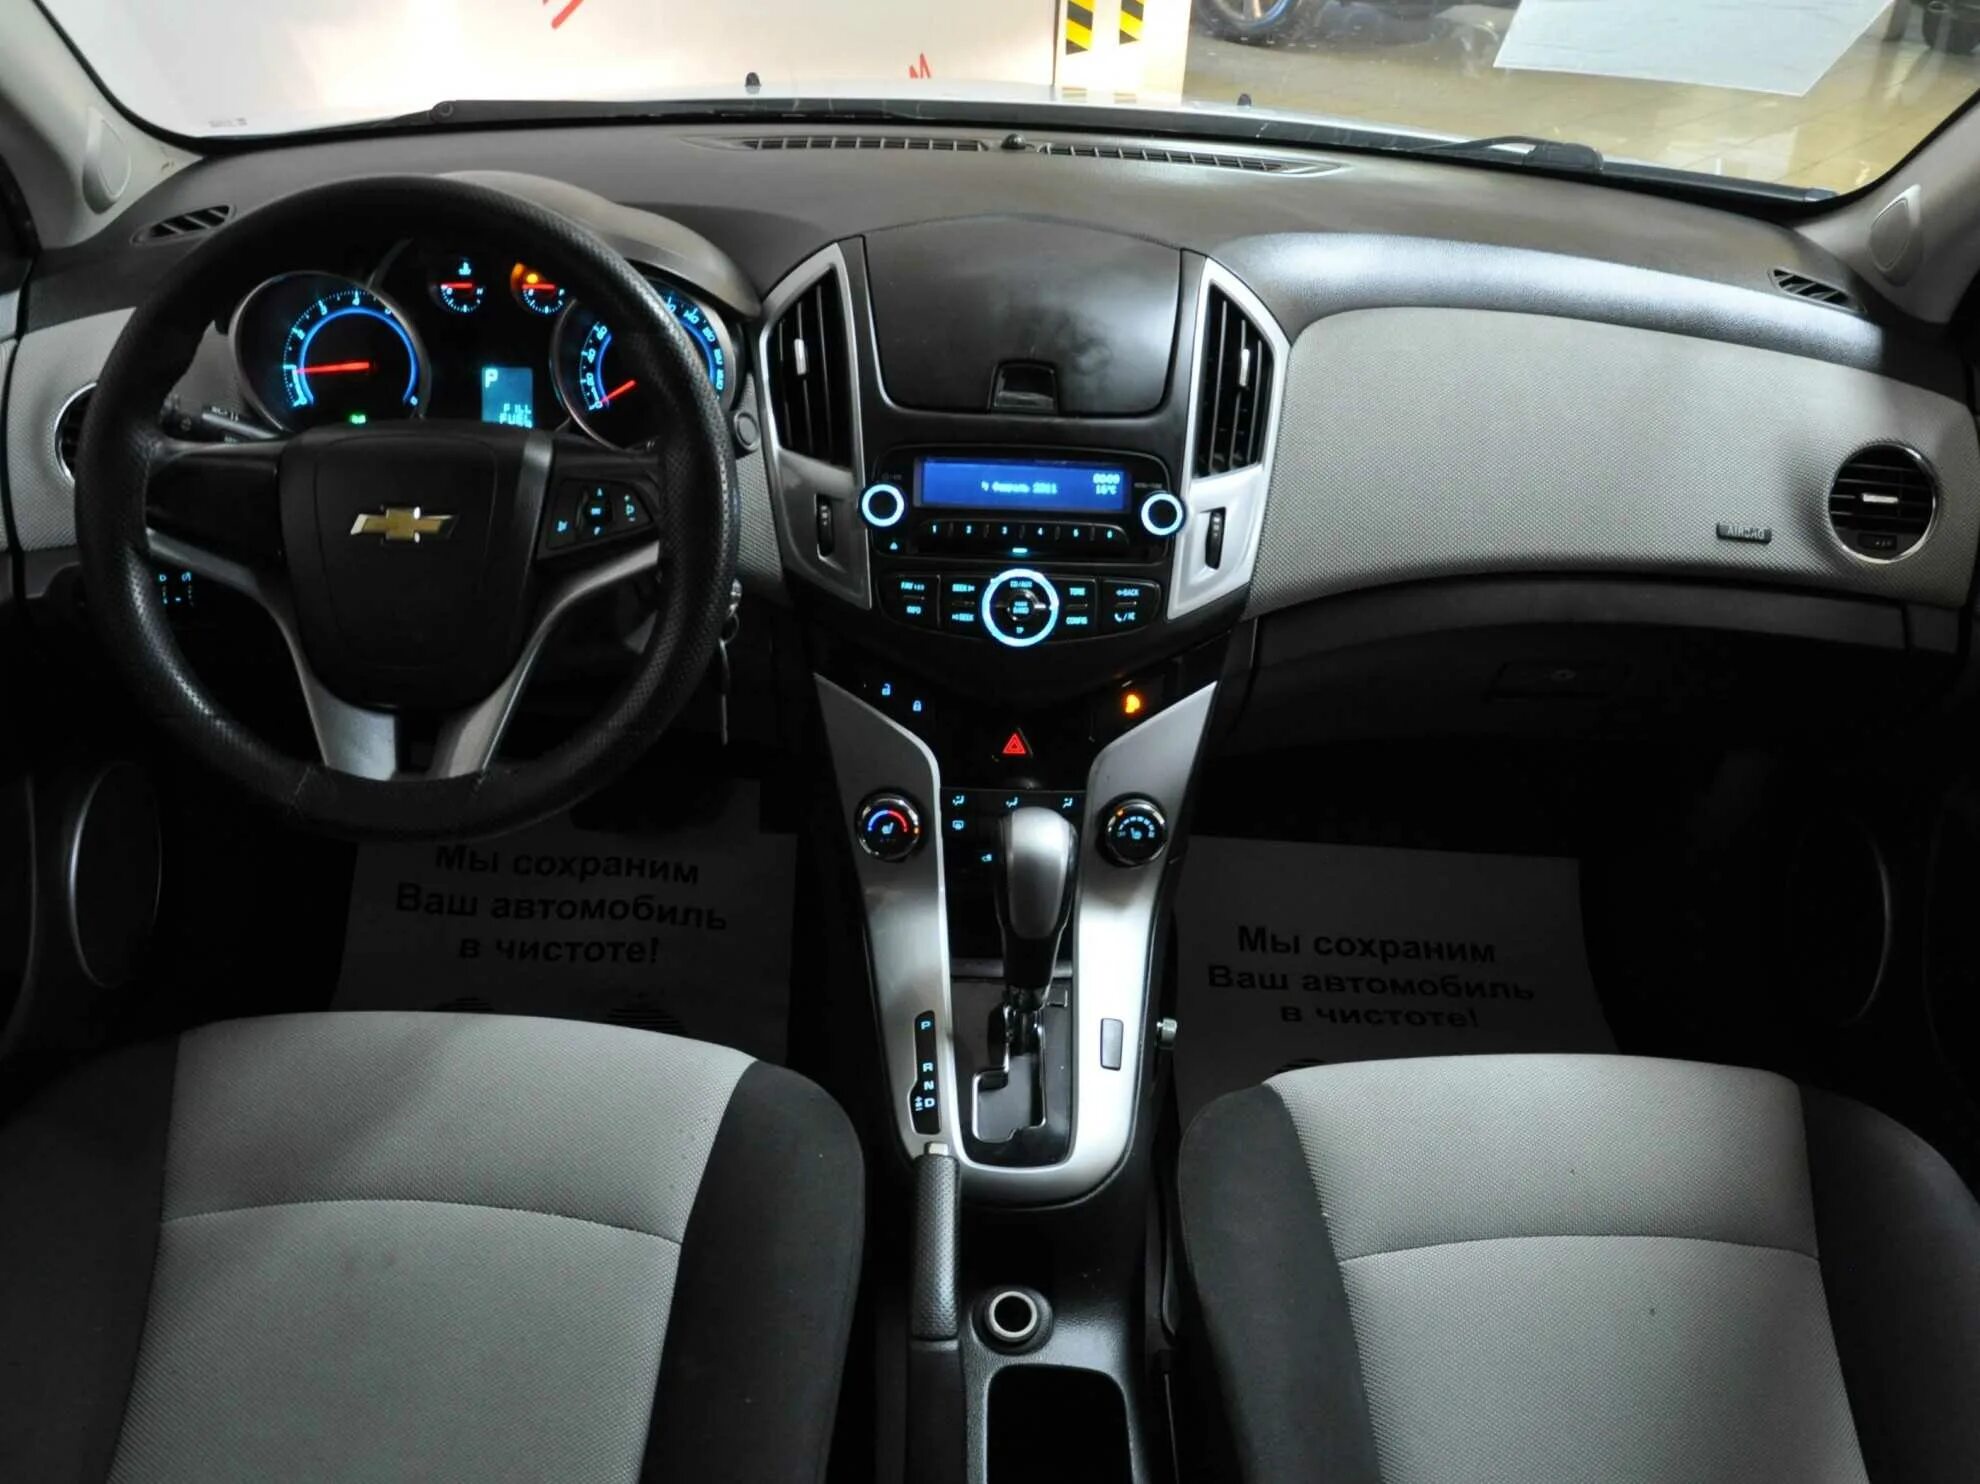 Шевроле хэтчбек салон. Chevrolet Cruze i 2013. Chevrolet Cruze 2013 Interior. Chevrolet Cruze 2015 салон. Chevrolet Cruze 2013 салон.